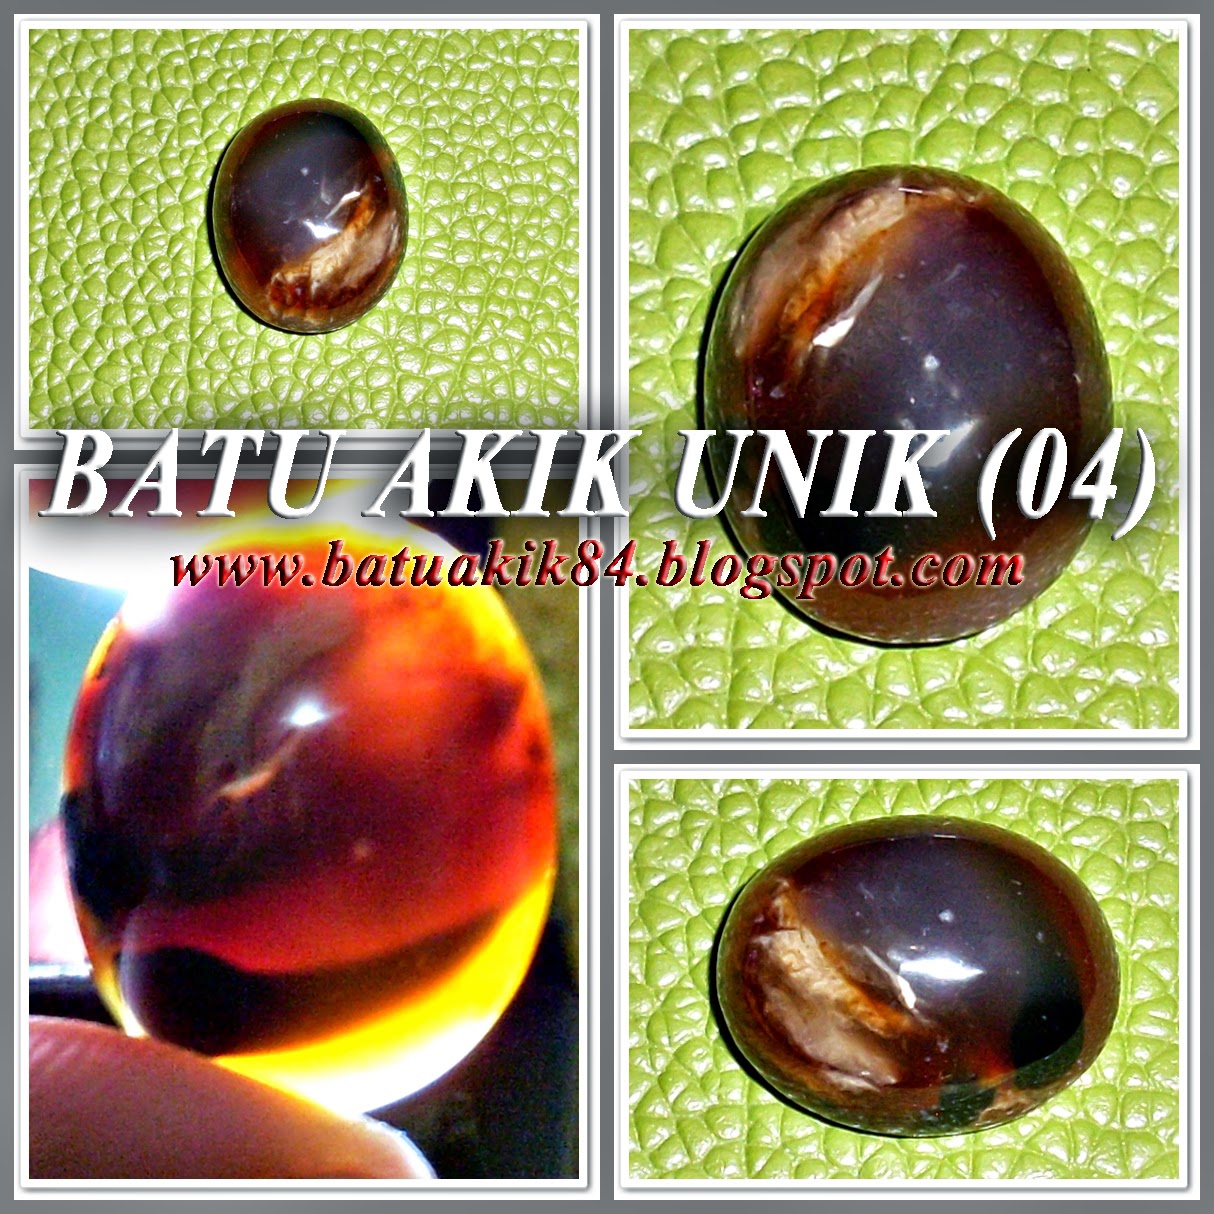 http://batuakik84.blogspot.com/2014/10/batu-akik-unik-04.html